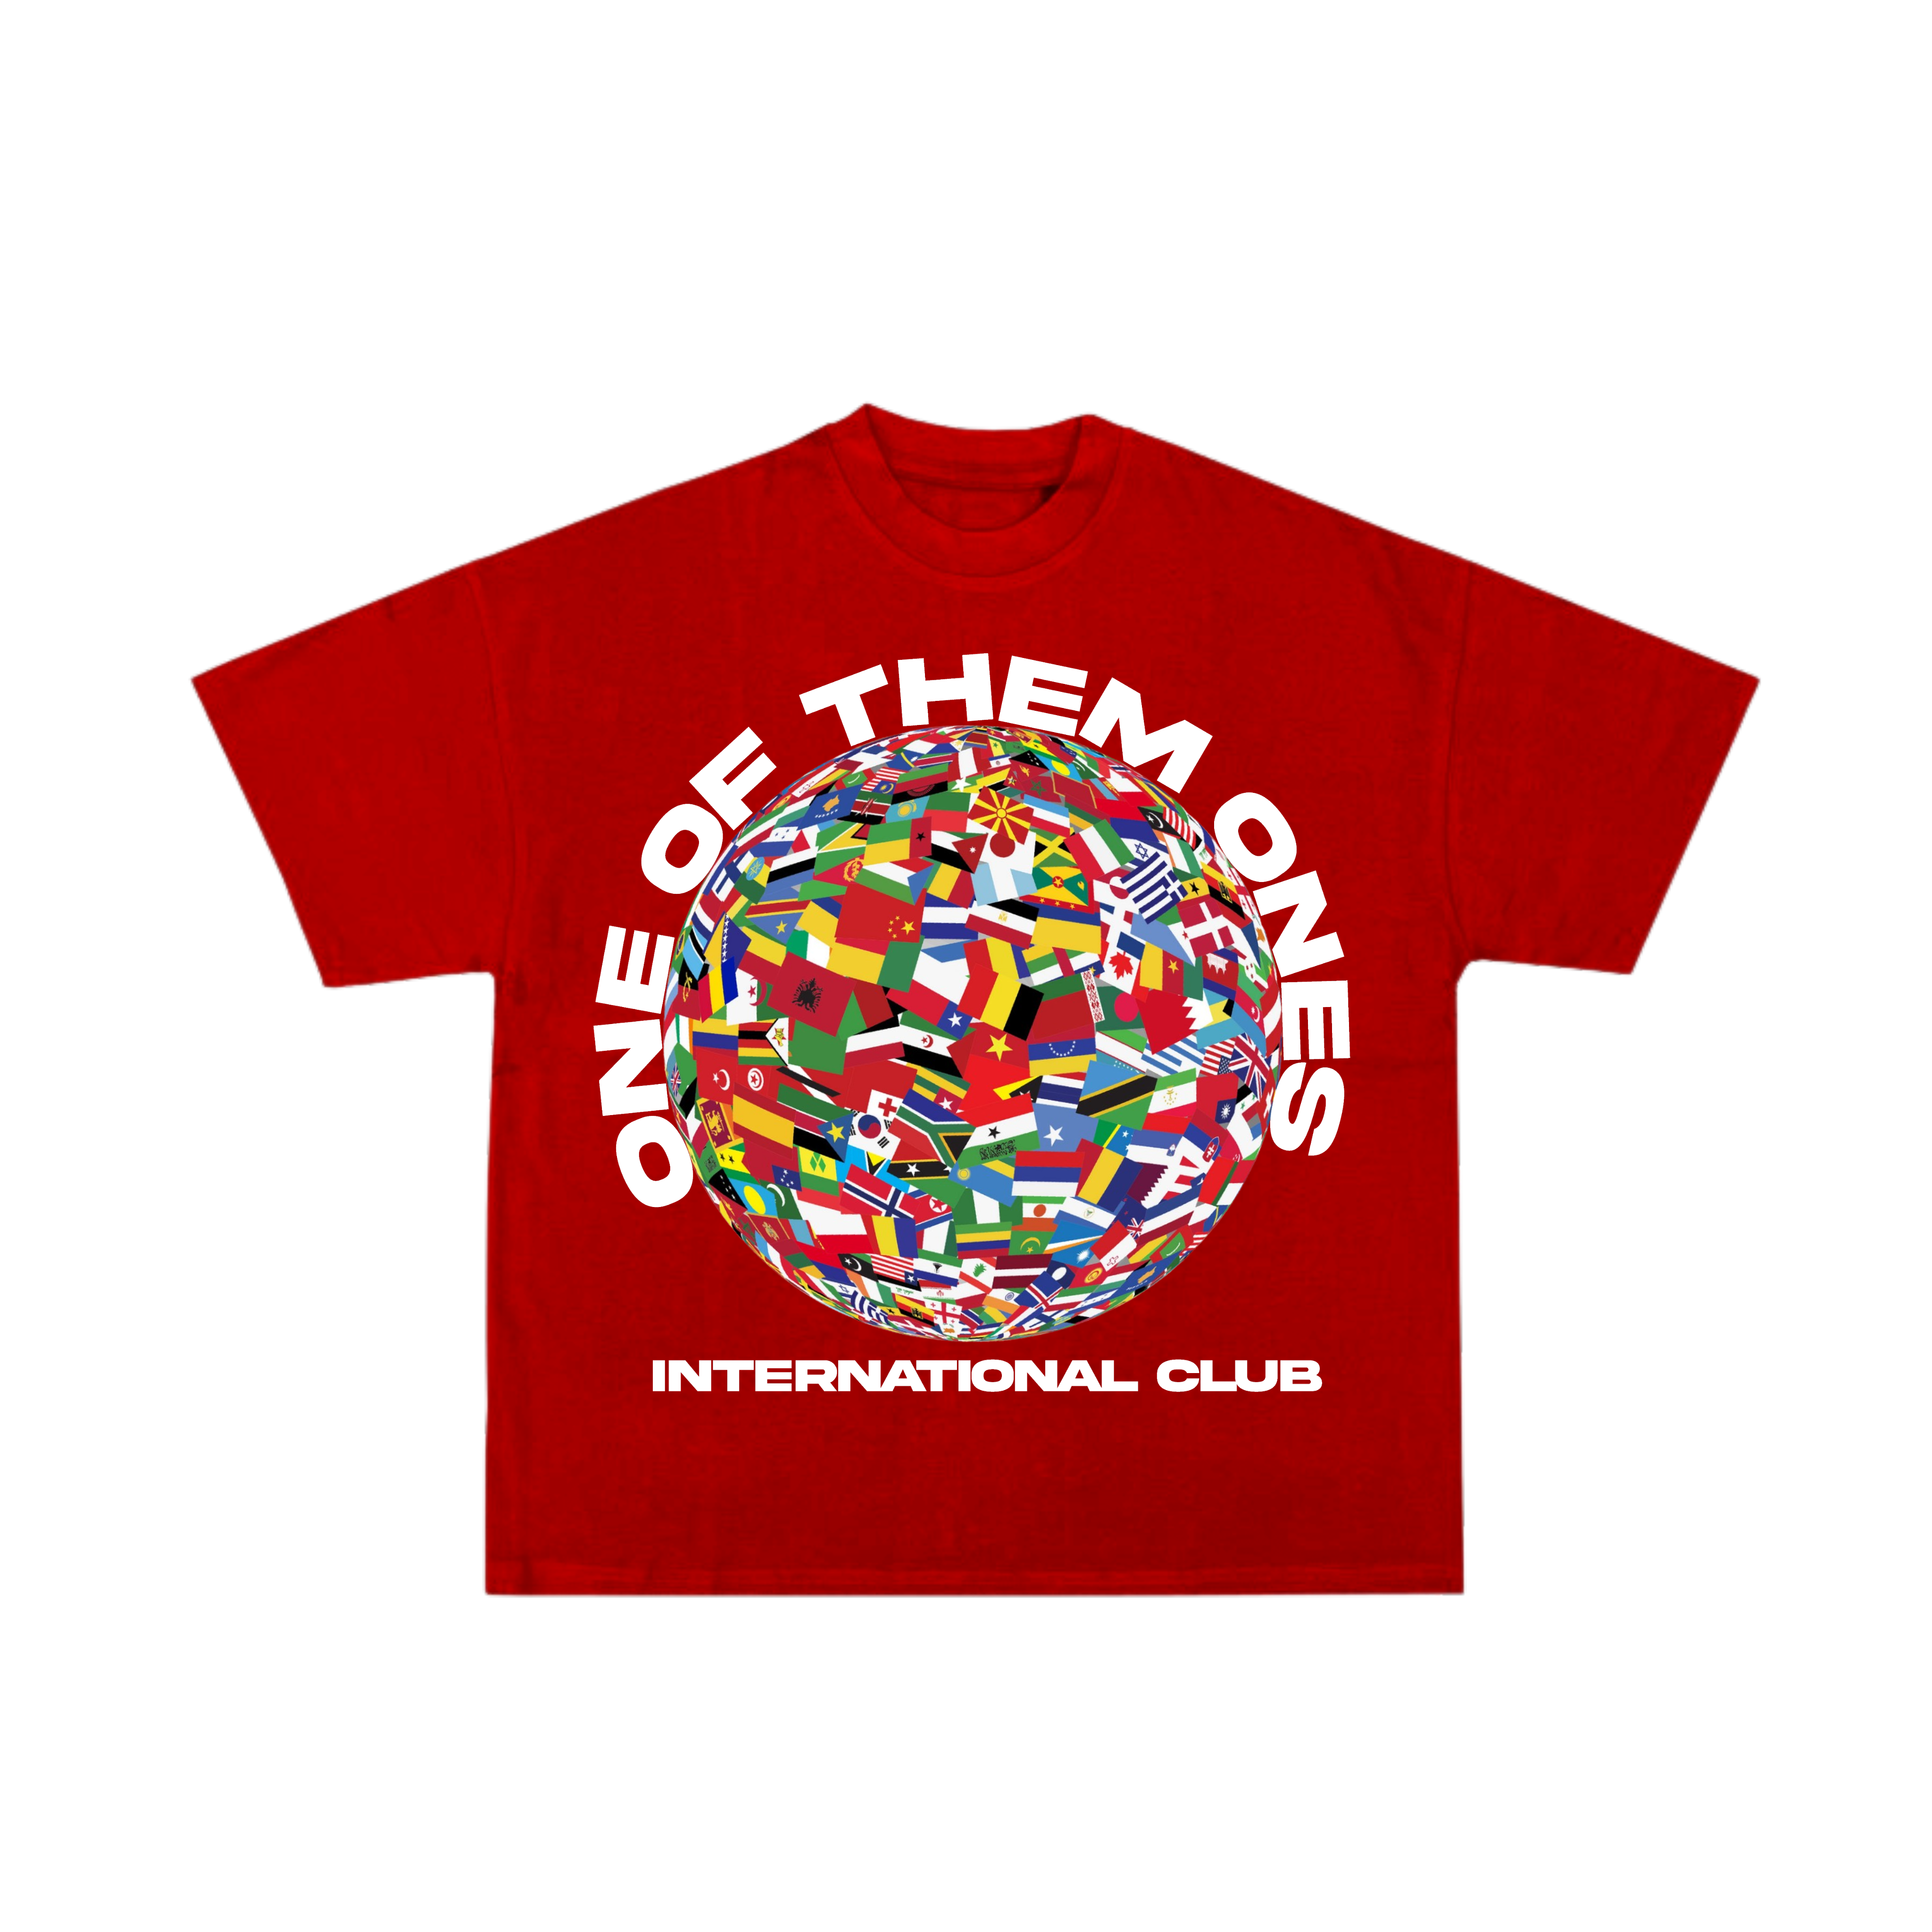 Organik Lyfestyle - 1OFTHEM1's International Club - Red T-Shirt